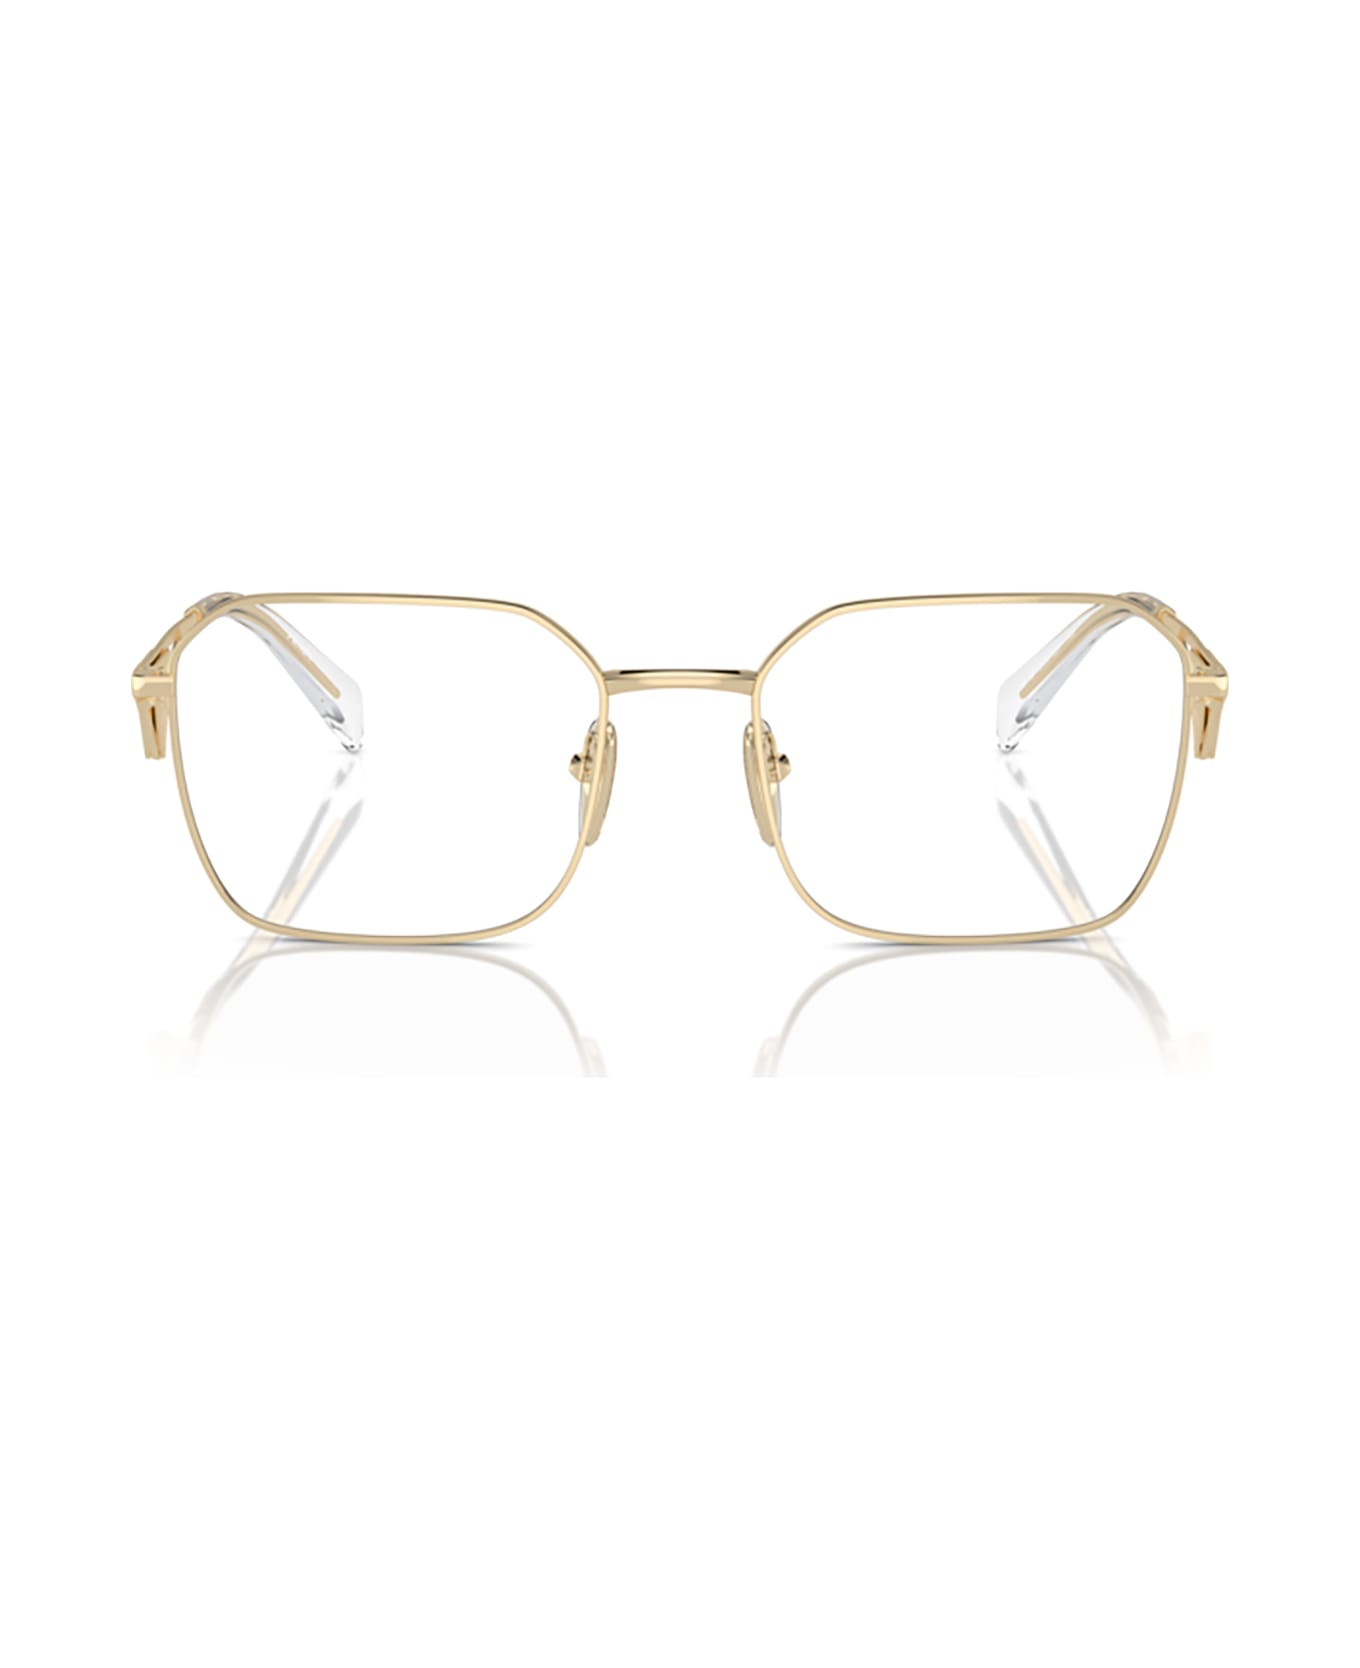 Prada Eyewear Pr A51v Pale Gold Glasses - Pale Gold